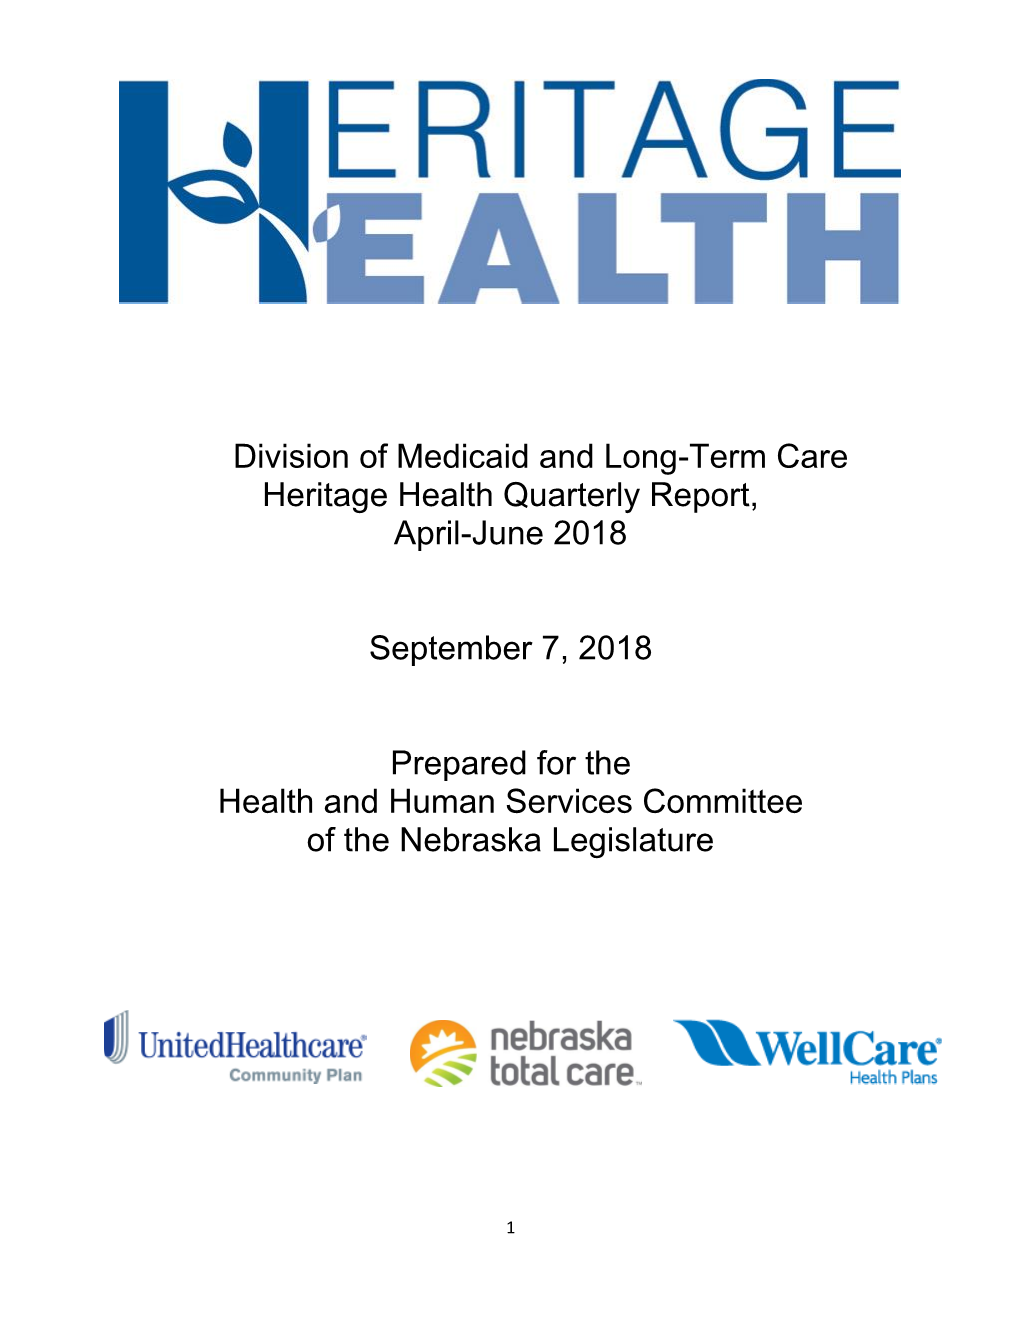 Heritage Health Quarterly Report April-June 2018